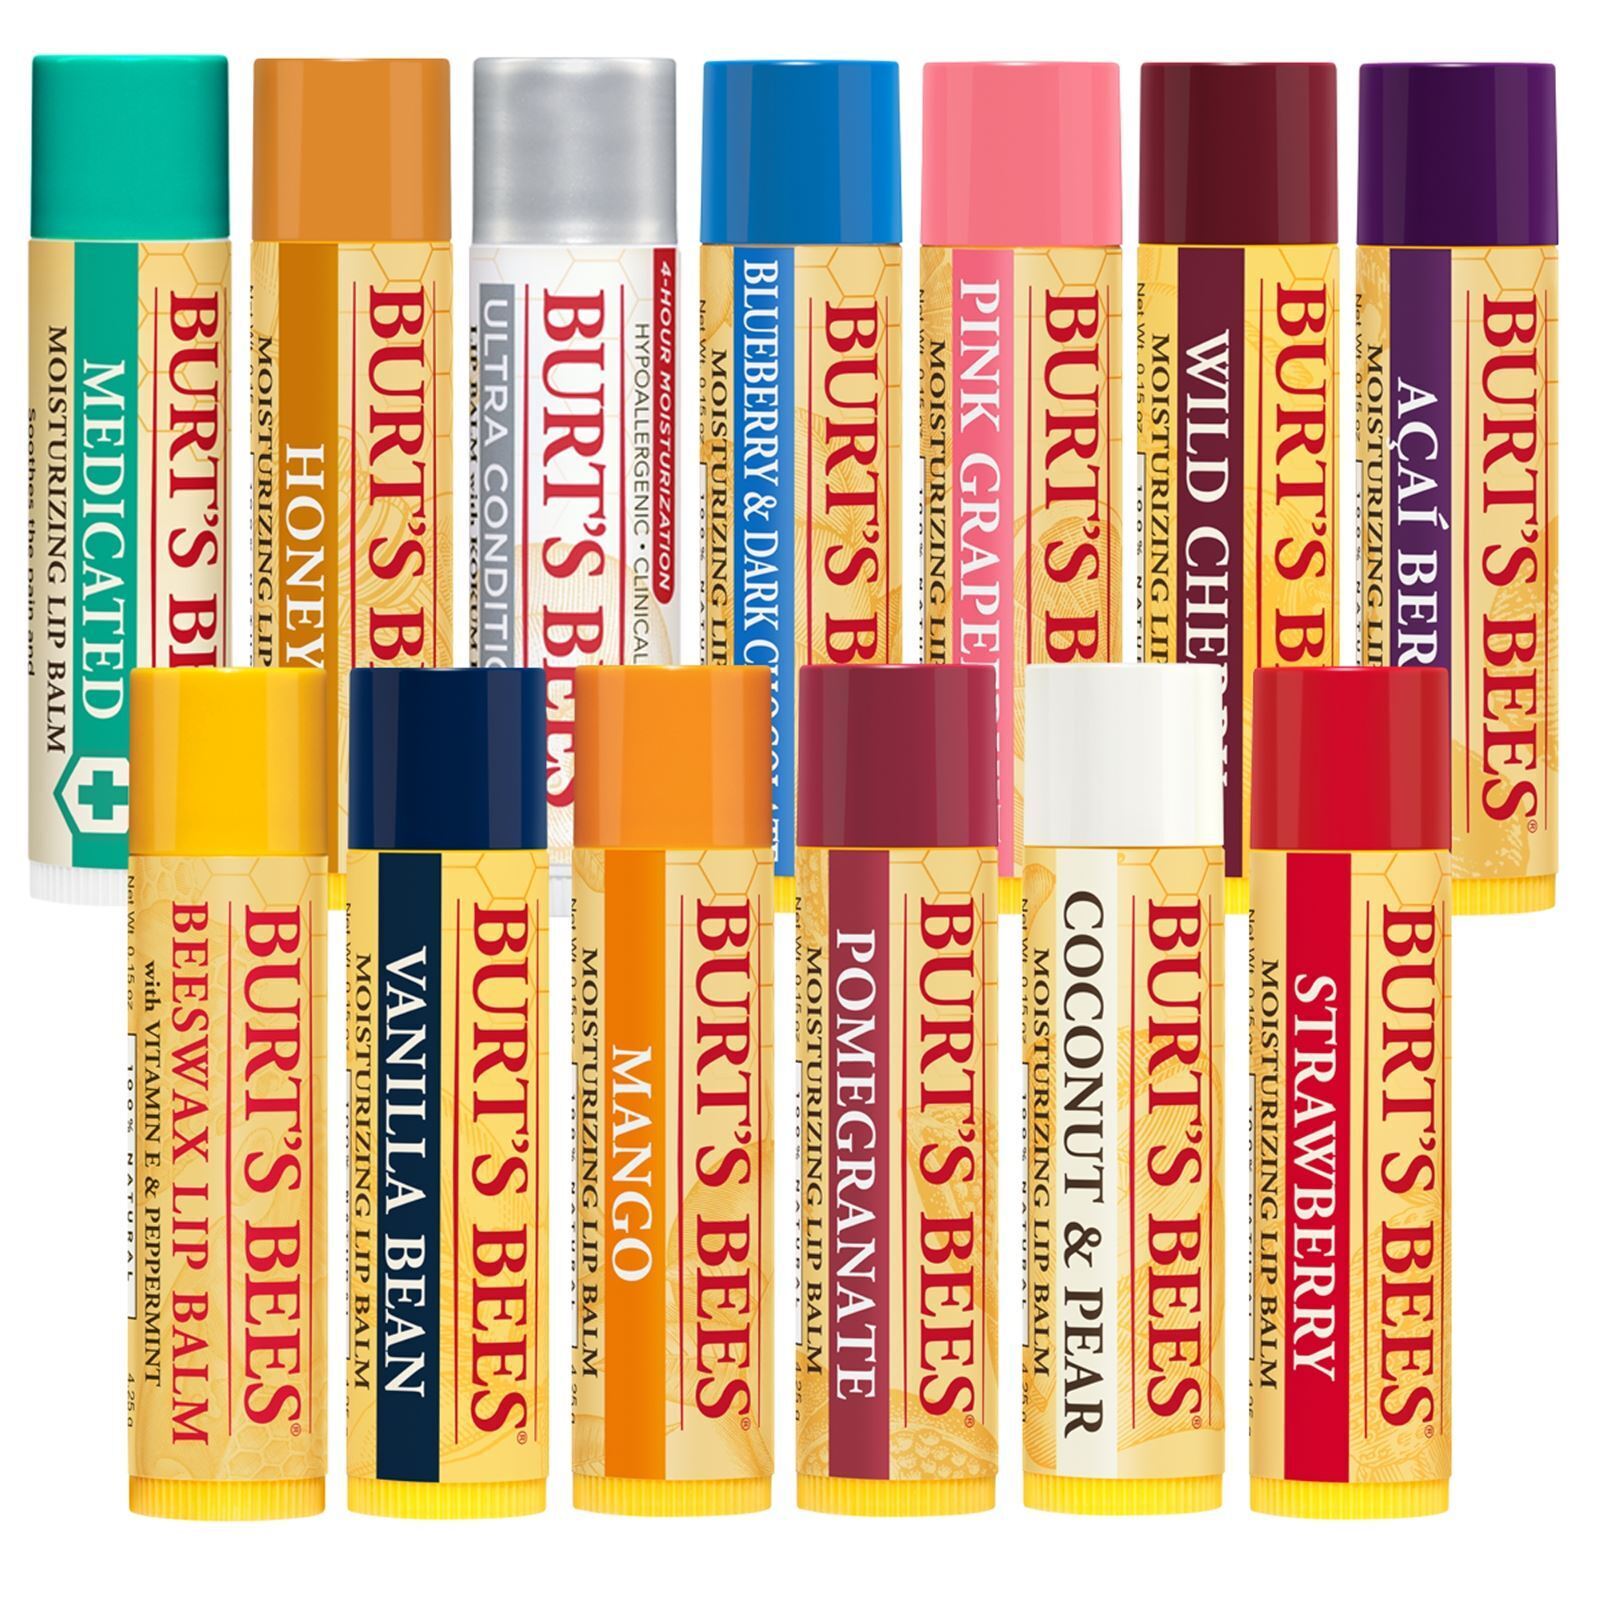 Blazen niemand Teleurstelling Burt's Bees Moisturizing Lip Balm (Sealed) BUY 2, GET 1 FREE!!! -Various  Shades | eBay